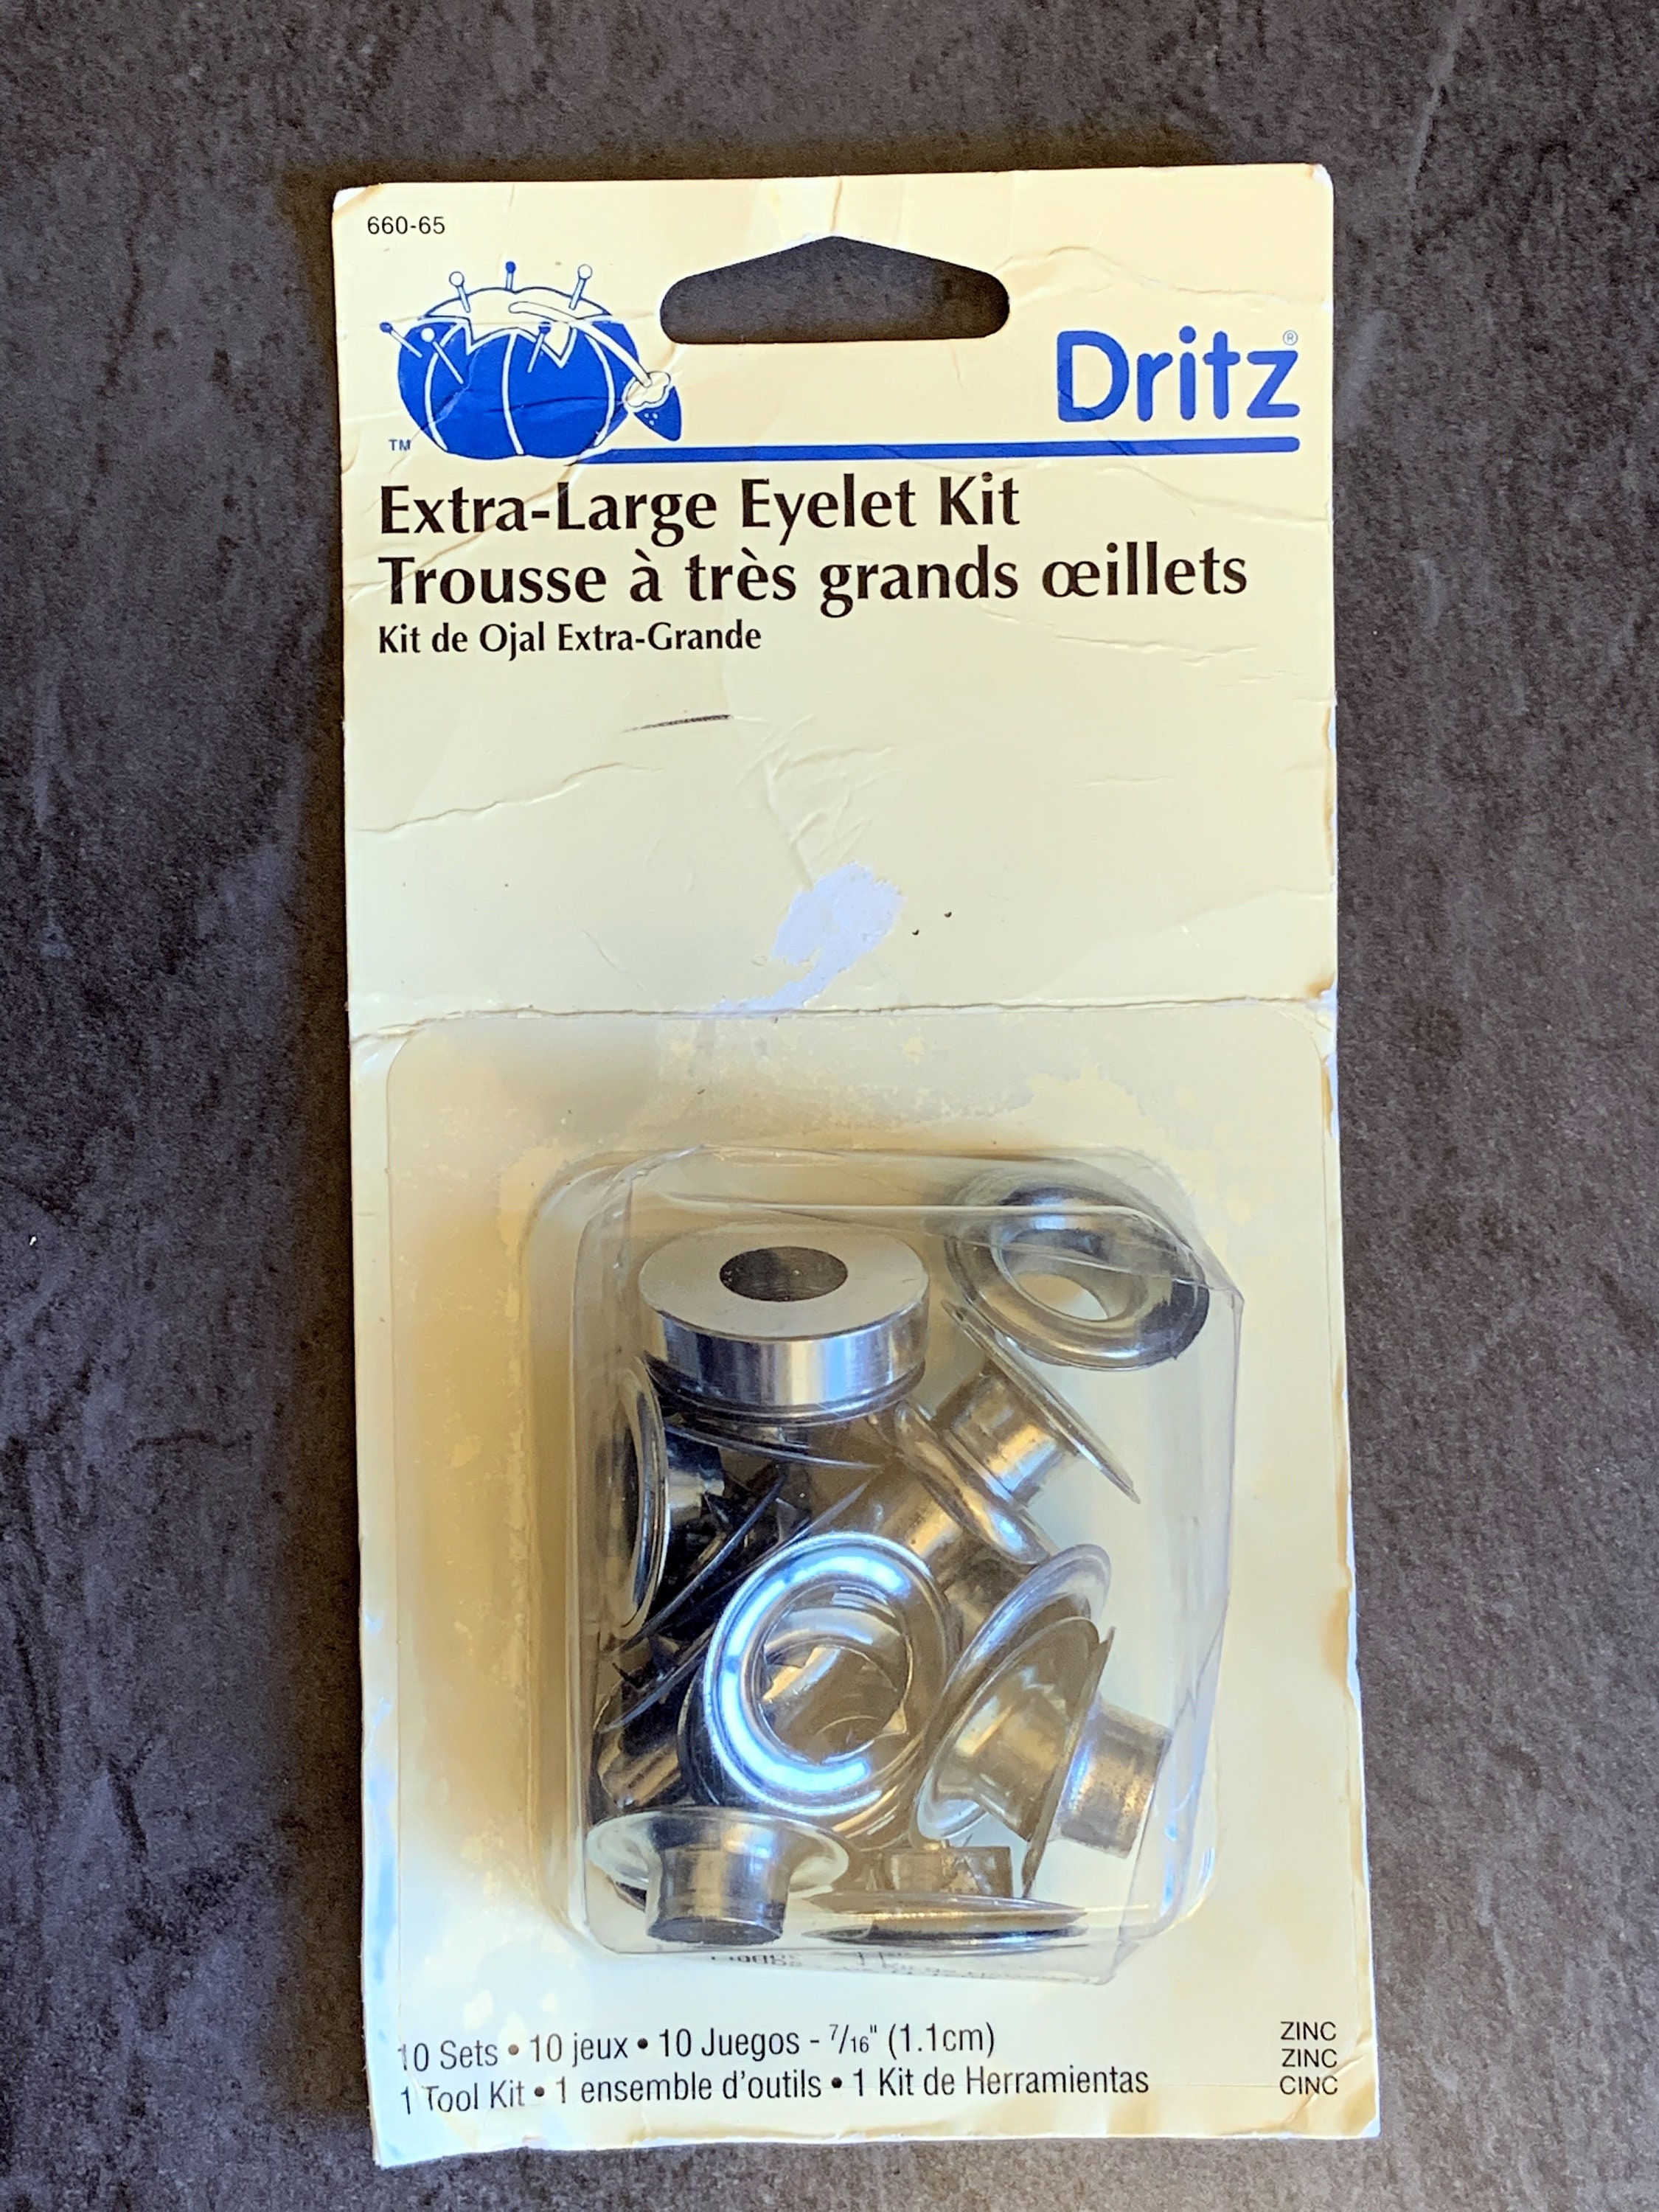 Dritz Zinc Extra-large 7/16 Eyelet Kit Set of 10 20 Pieces Total 7